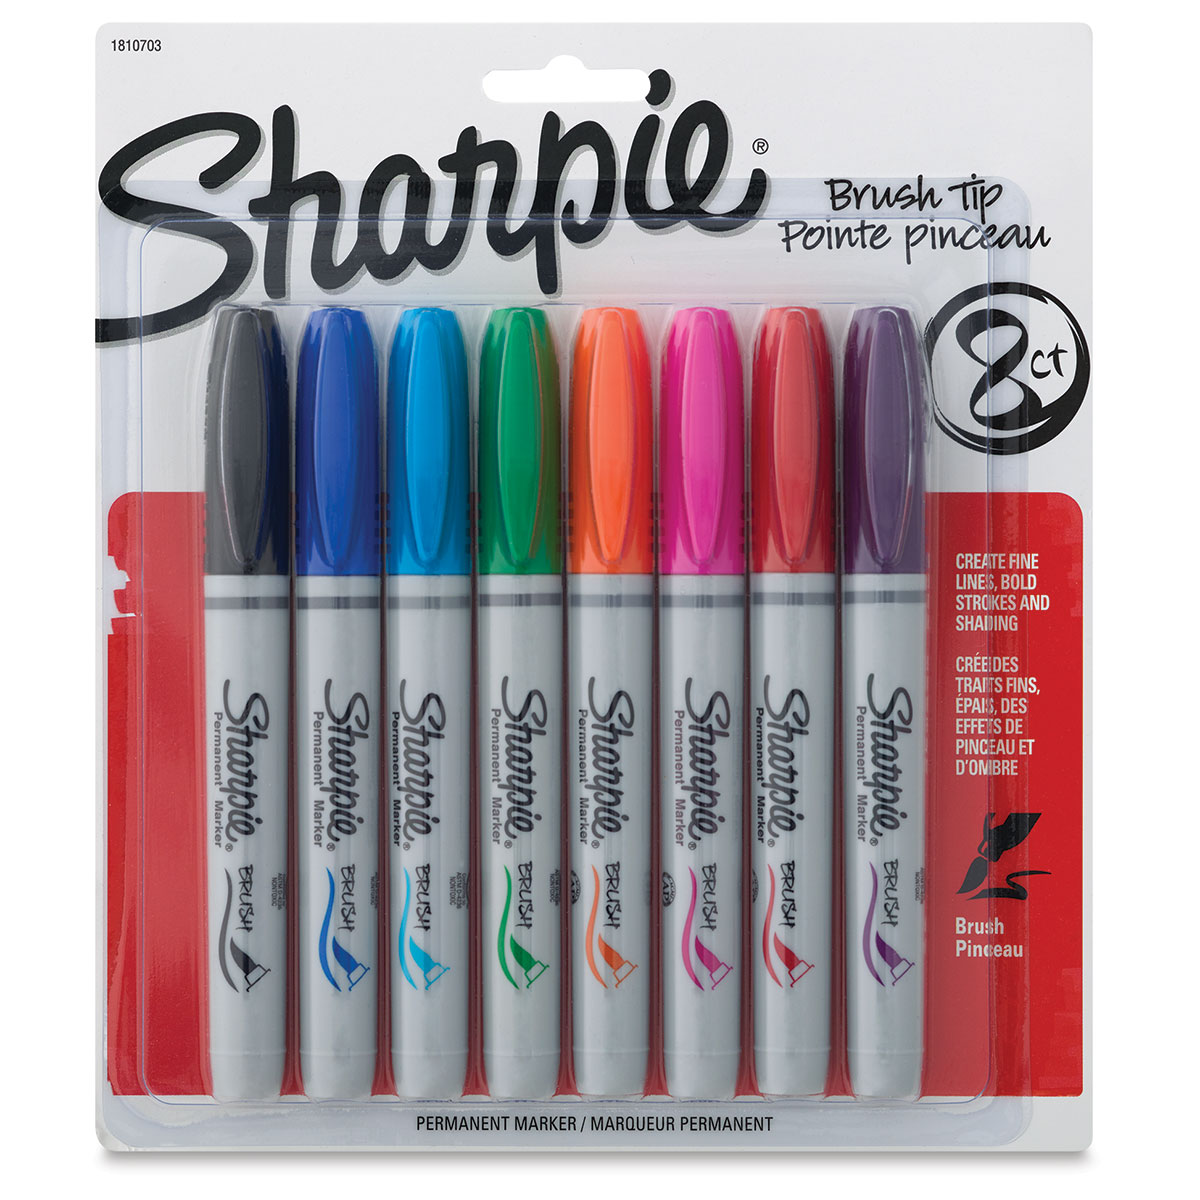 Sharpie Paint Pen - ThreadCentral